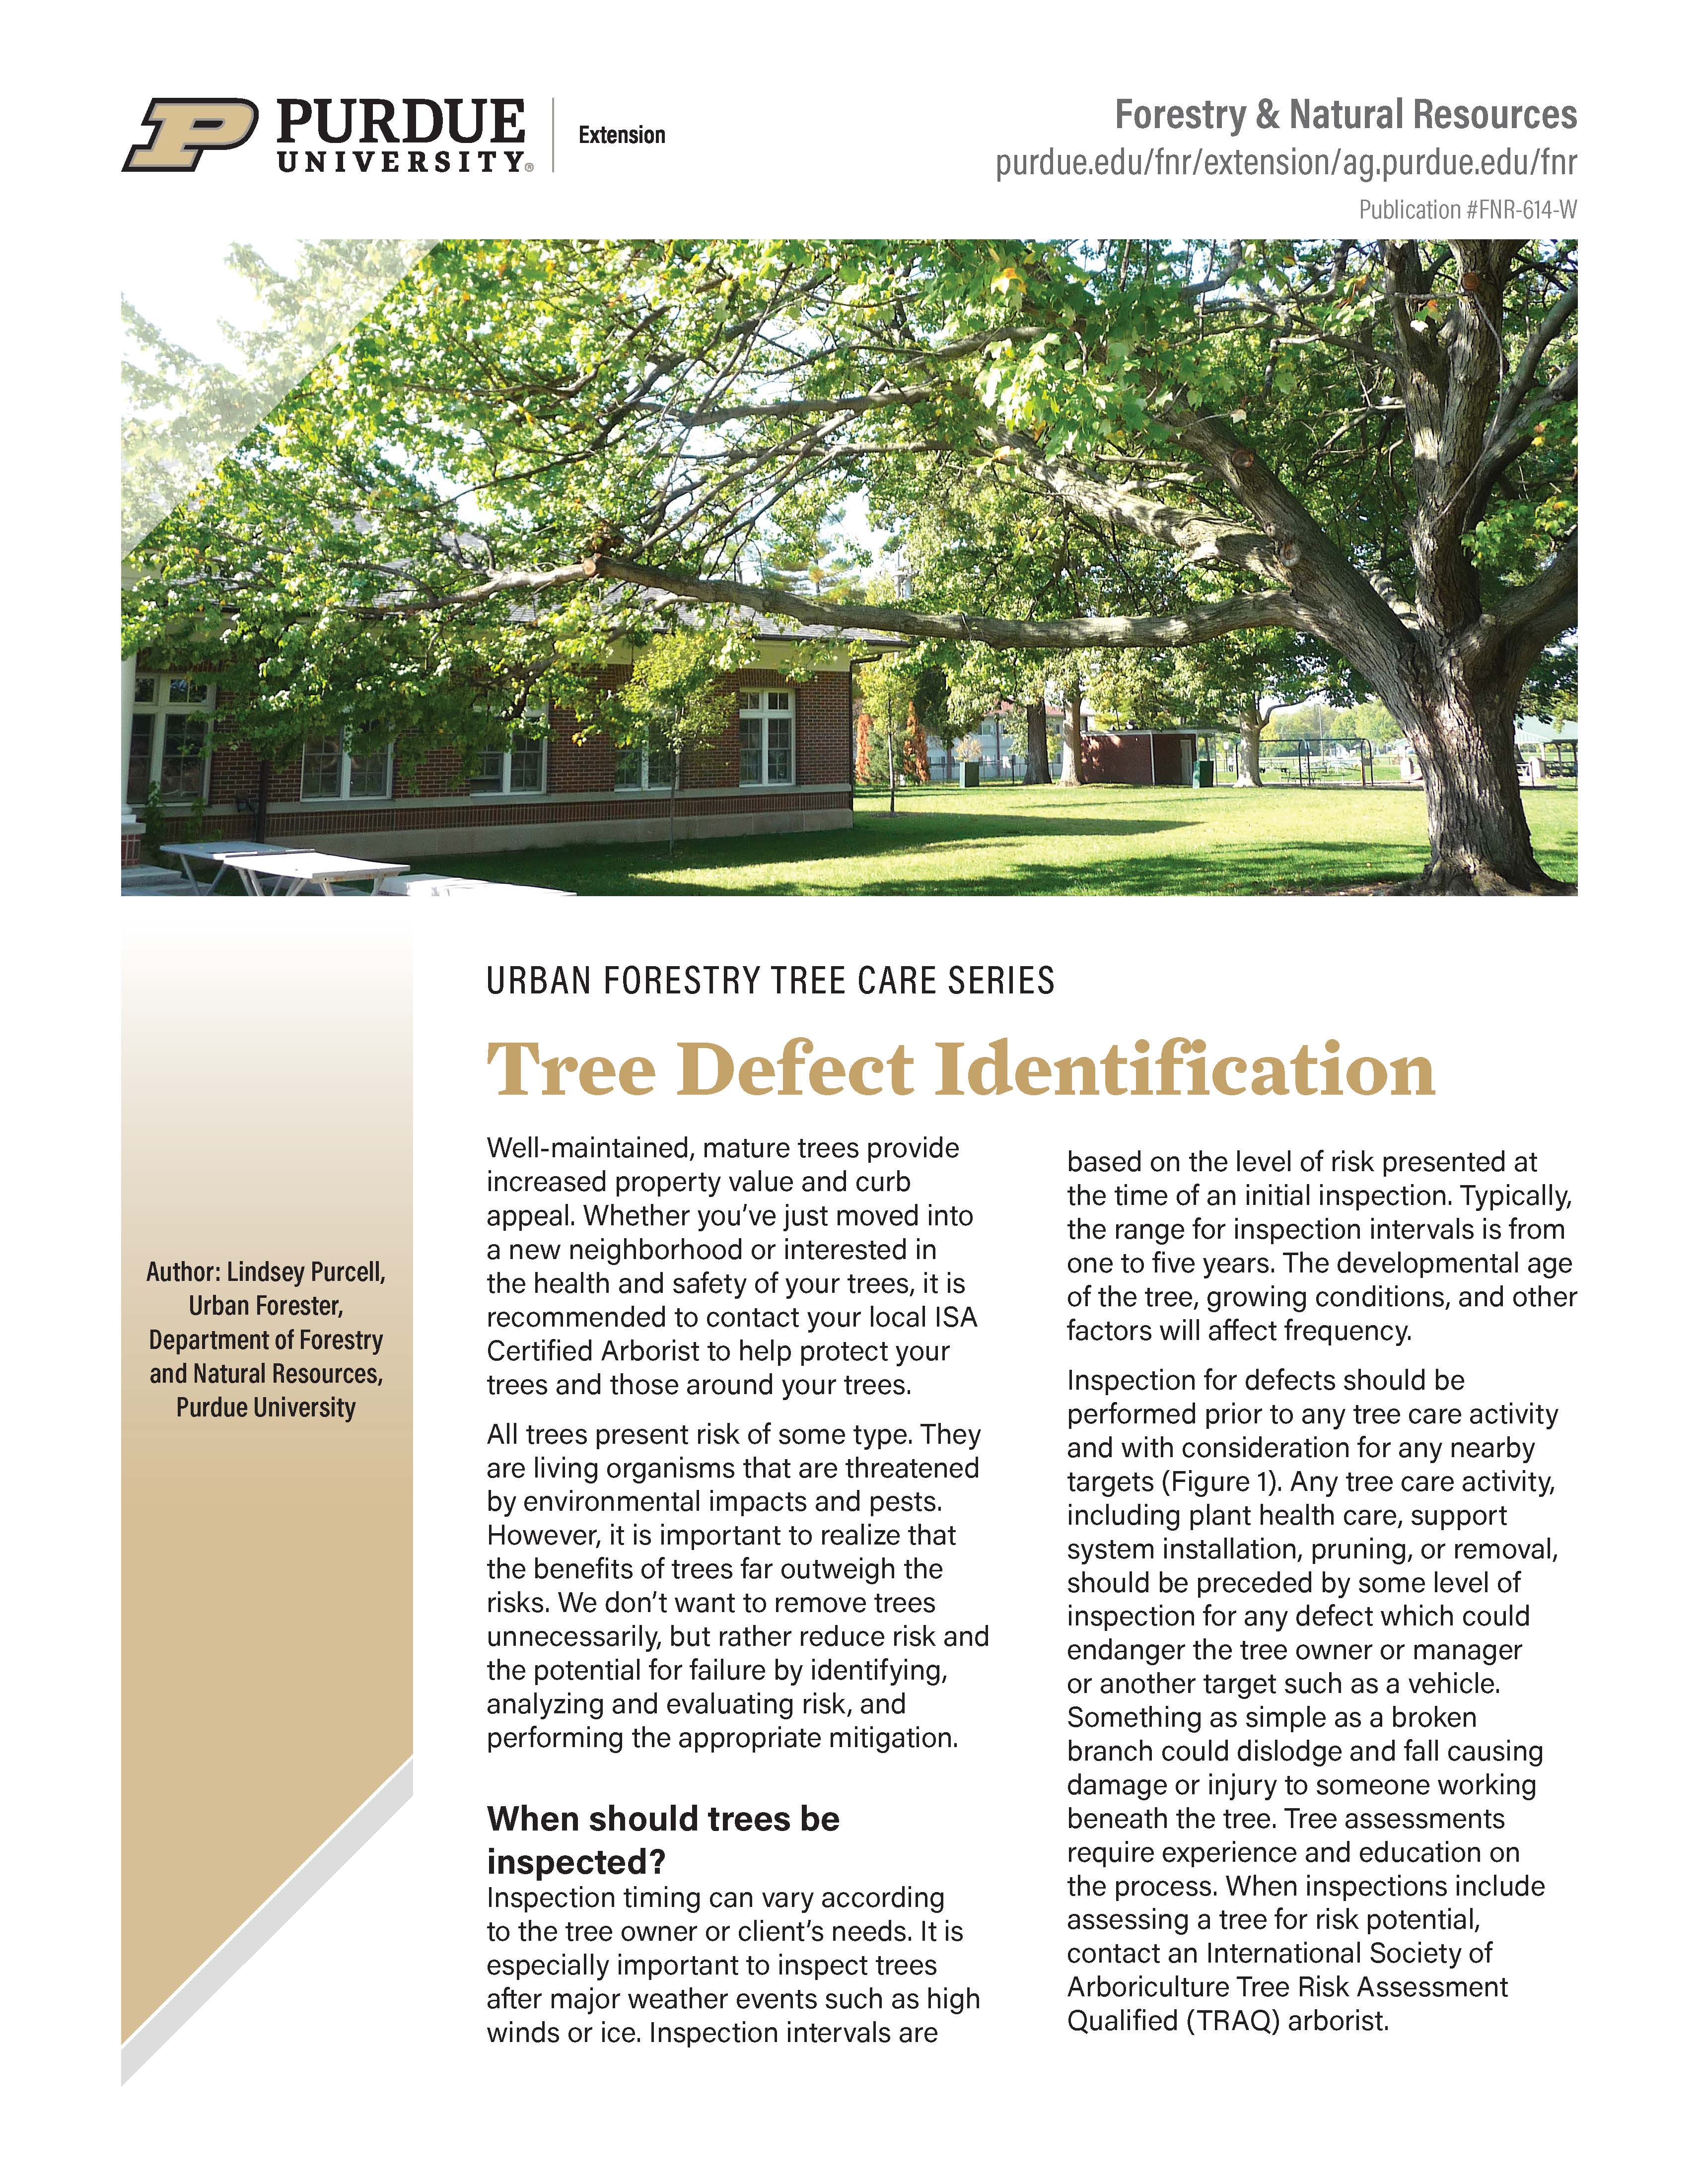 Tree Defect Identification